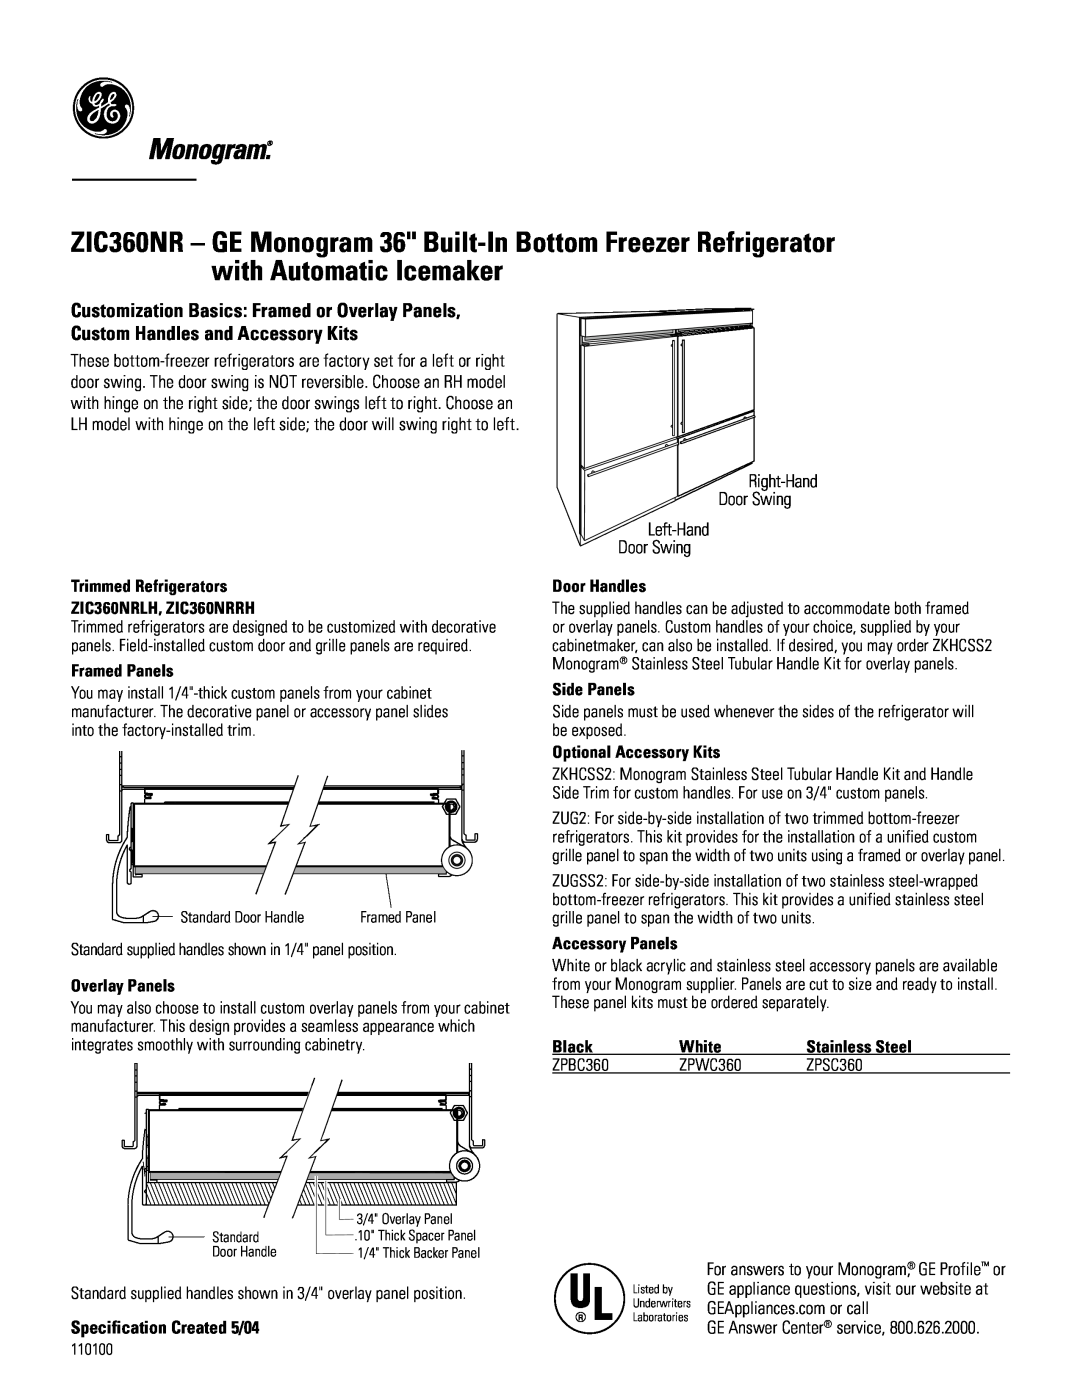 GE Monogram ZIC360NR dimensions Customization Basics Framed or Overlay Panels, Custom Handles and Accessory Kits 